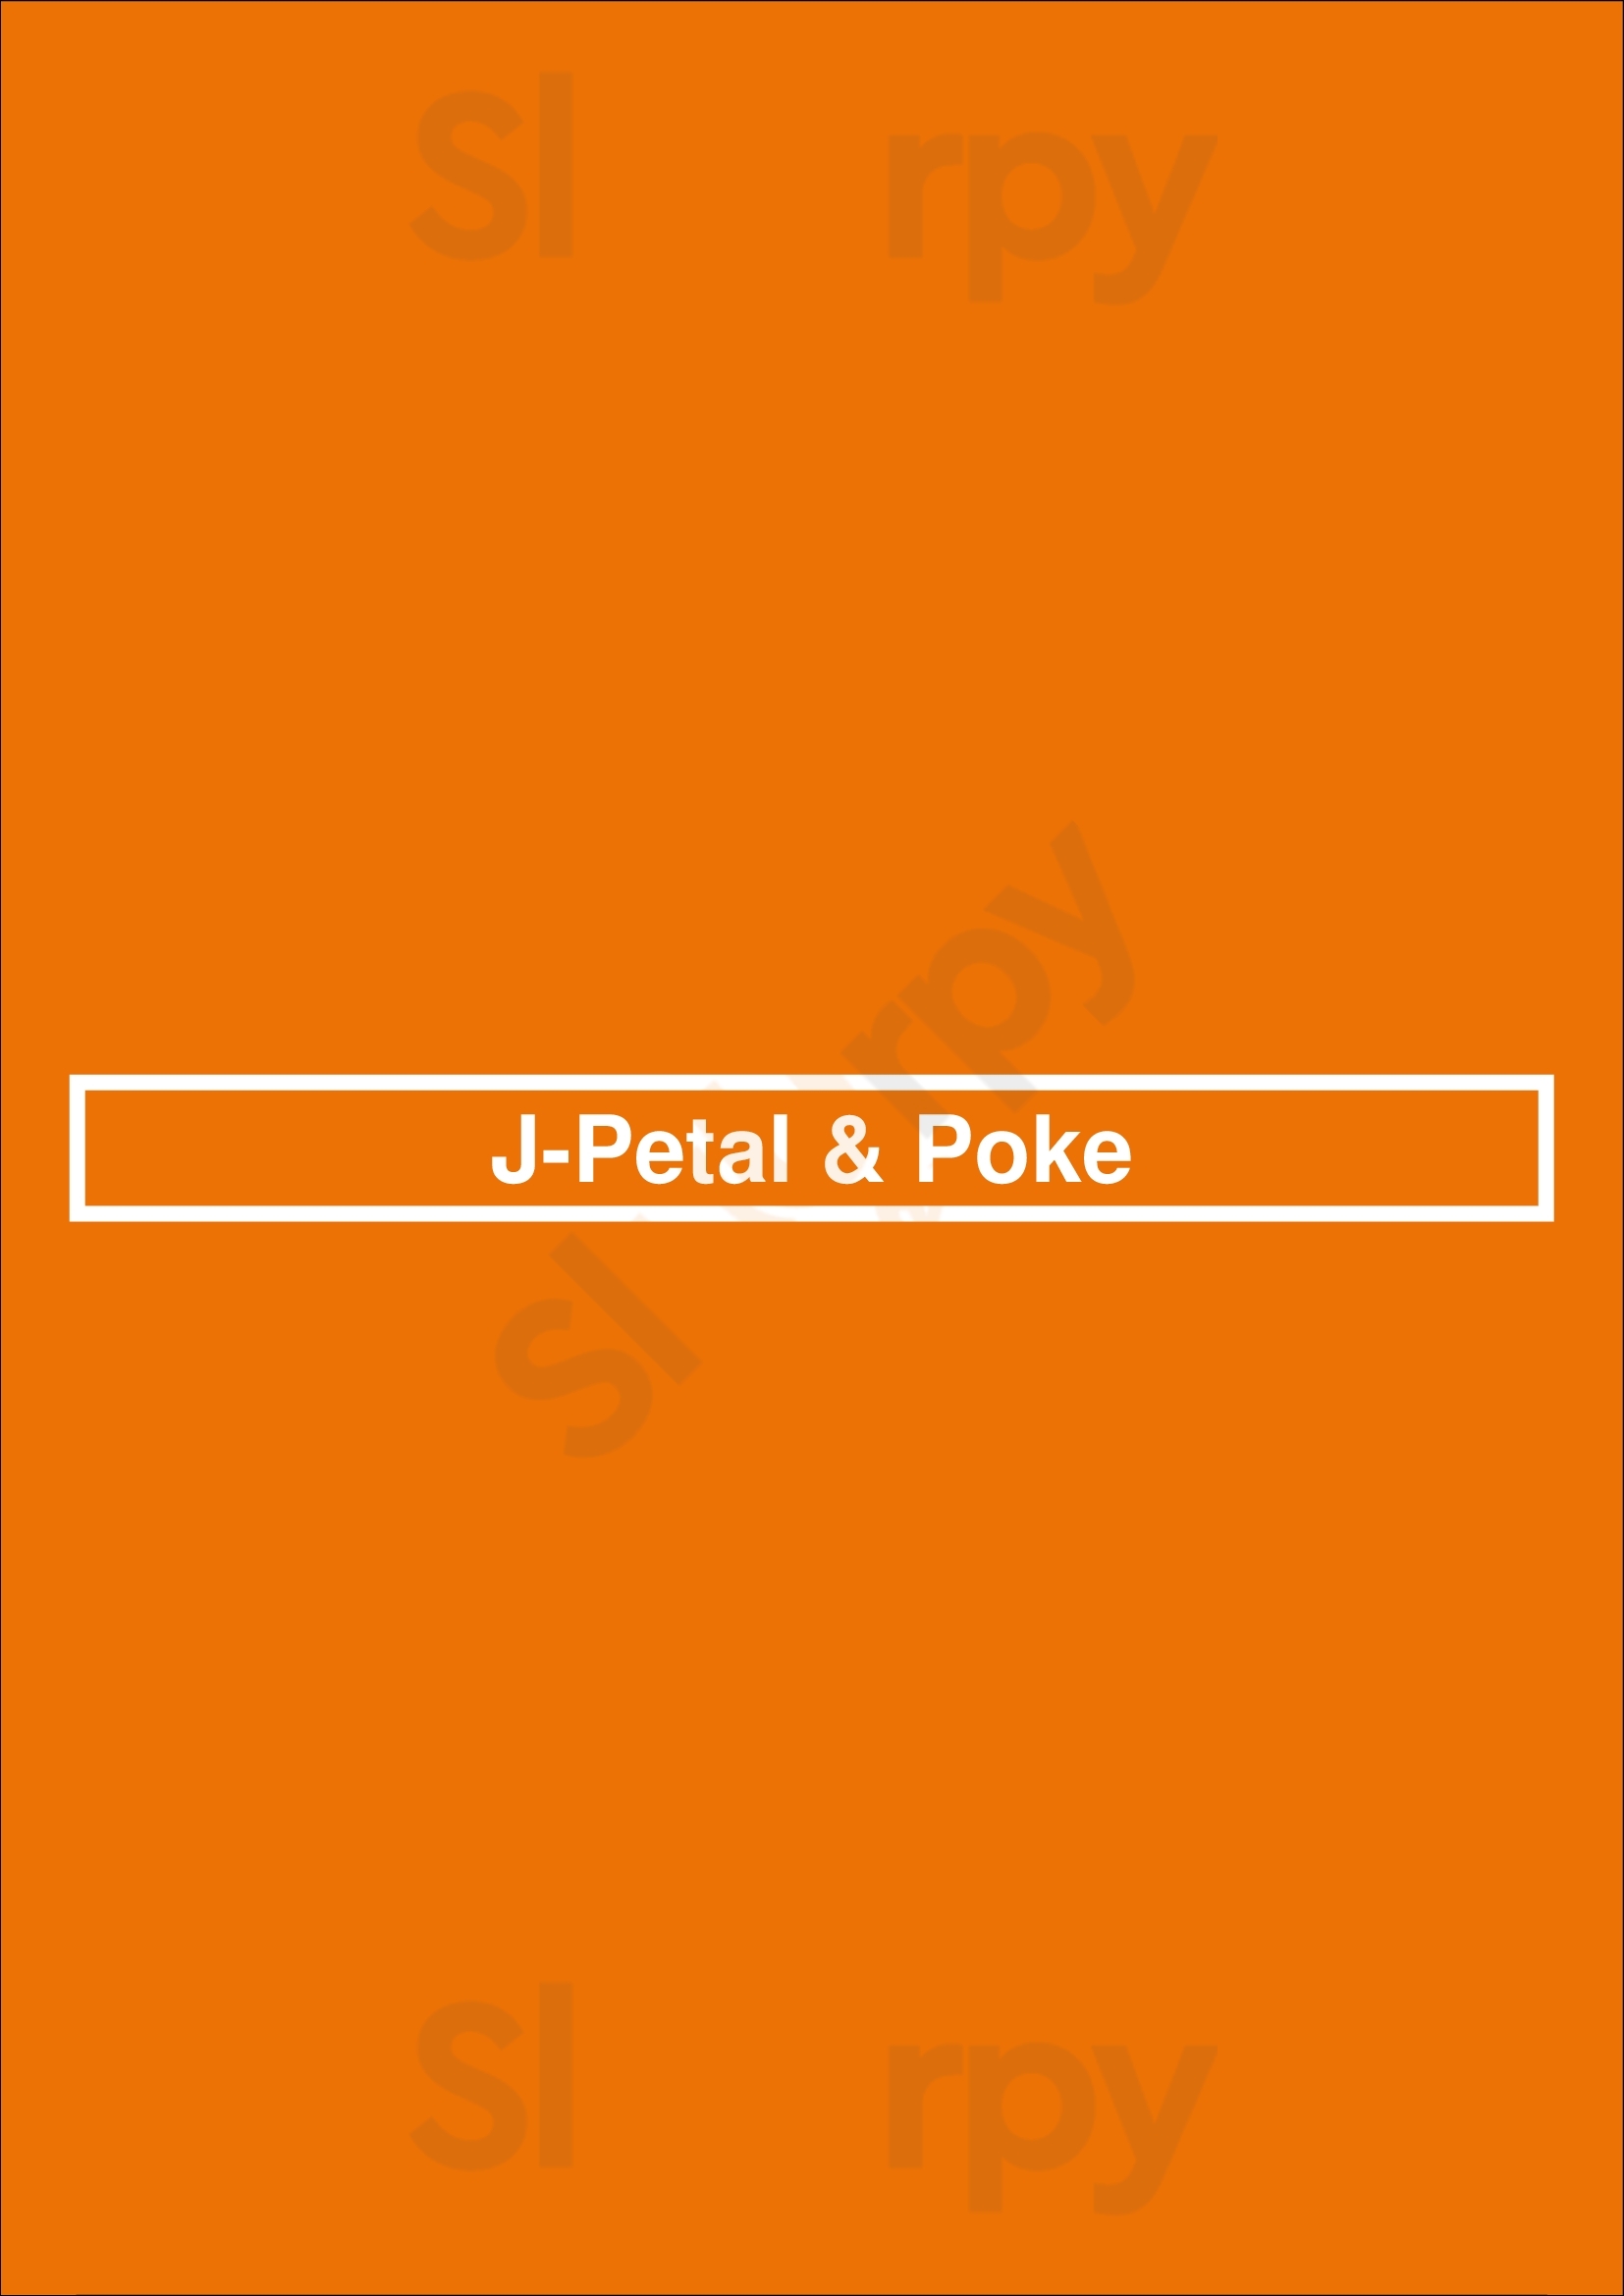 Jpetal & Poke Gainesville Menu - 1